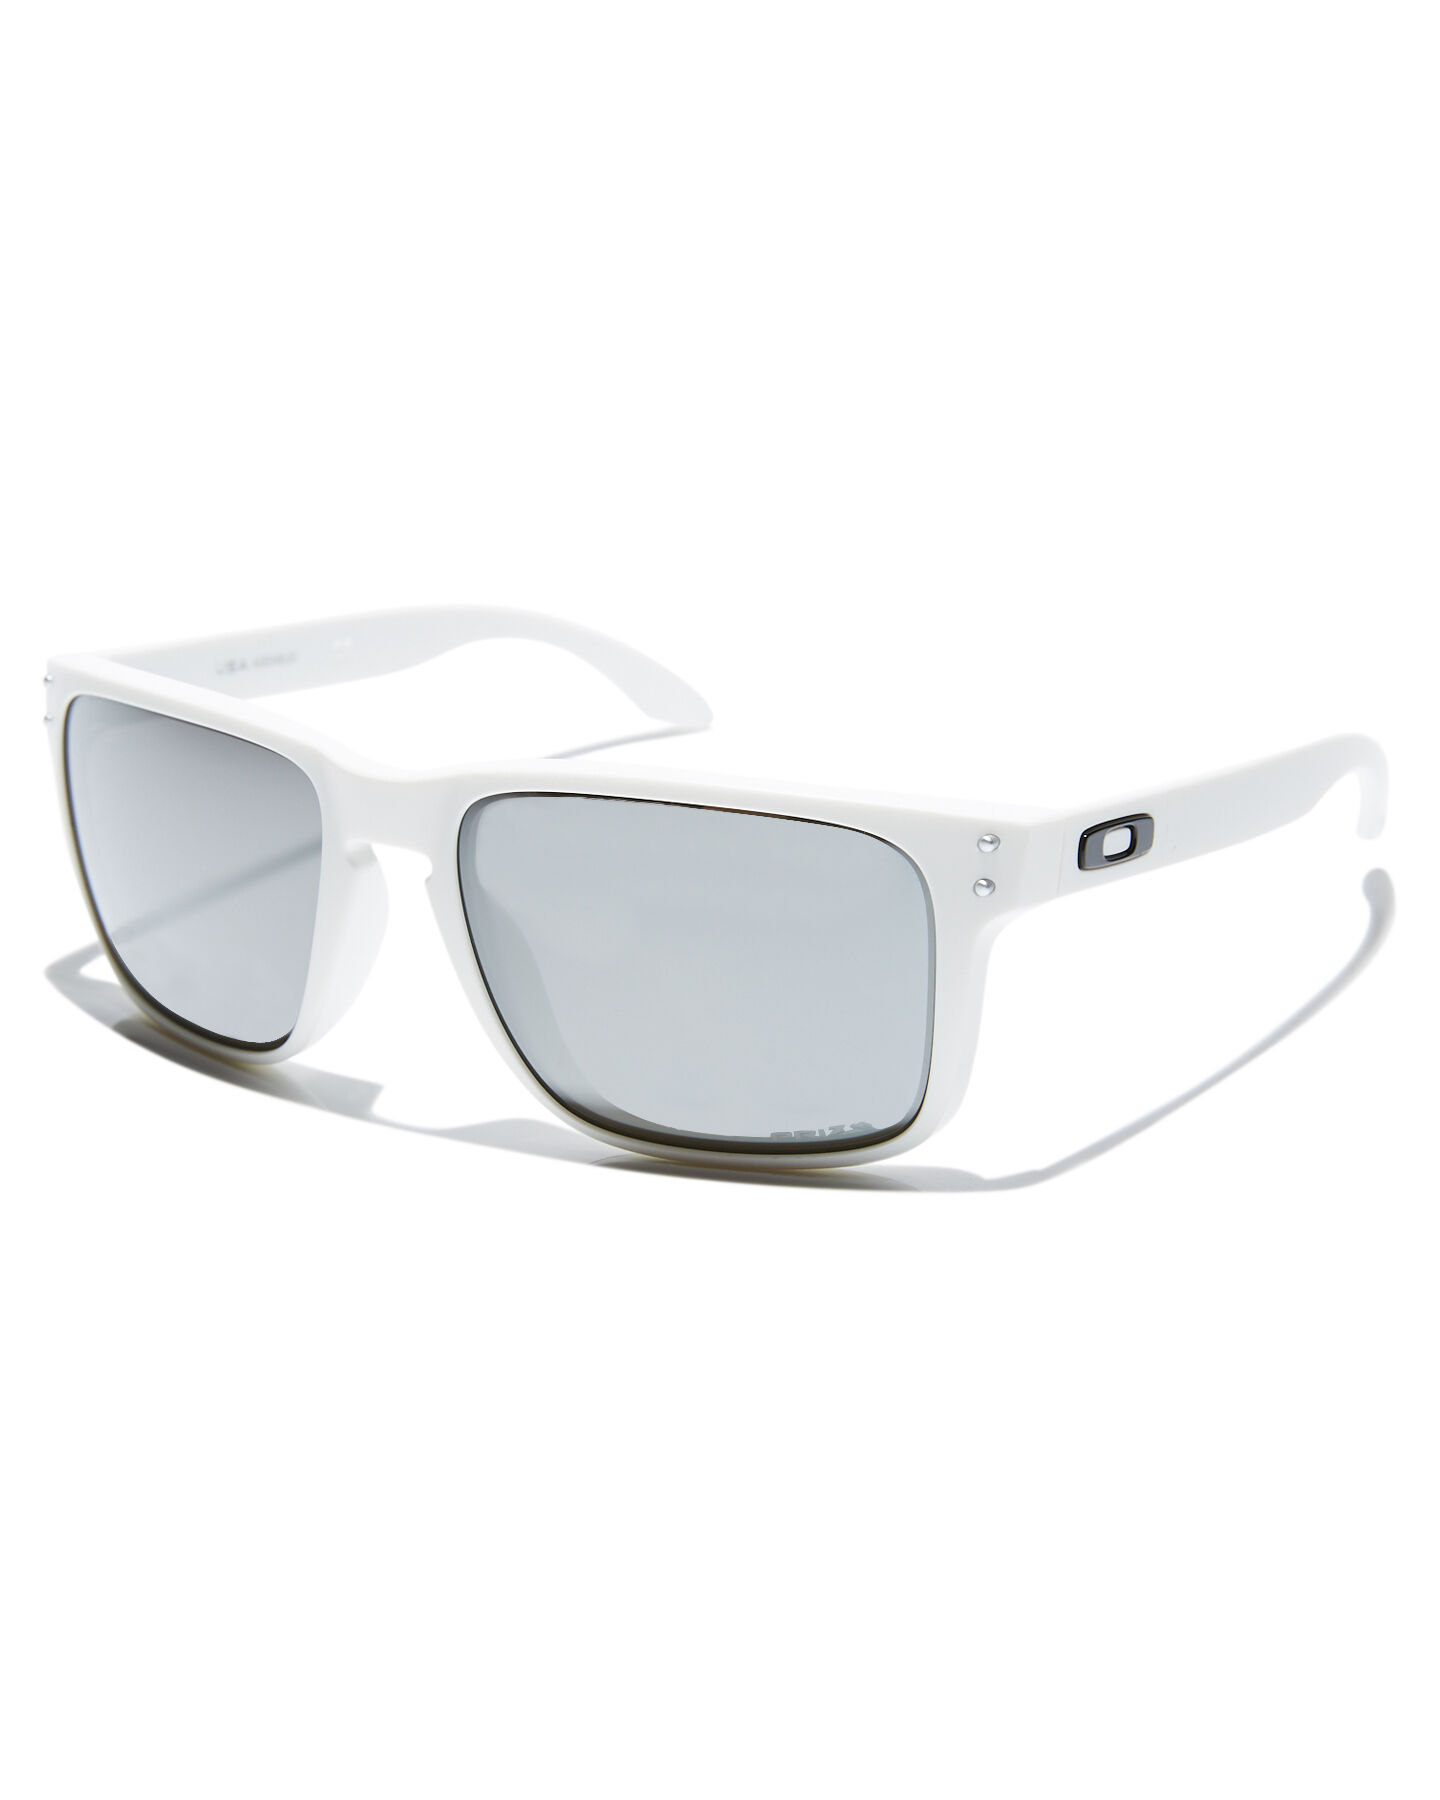 all white oakley sunglasses